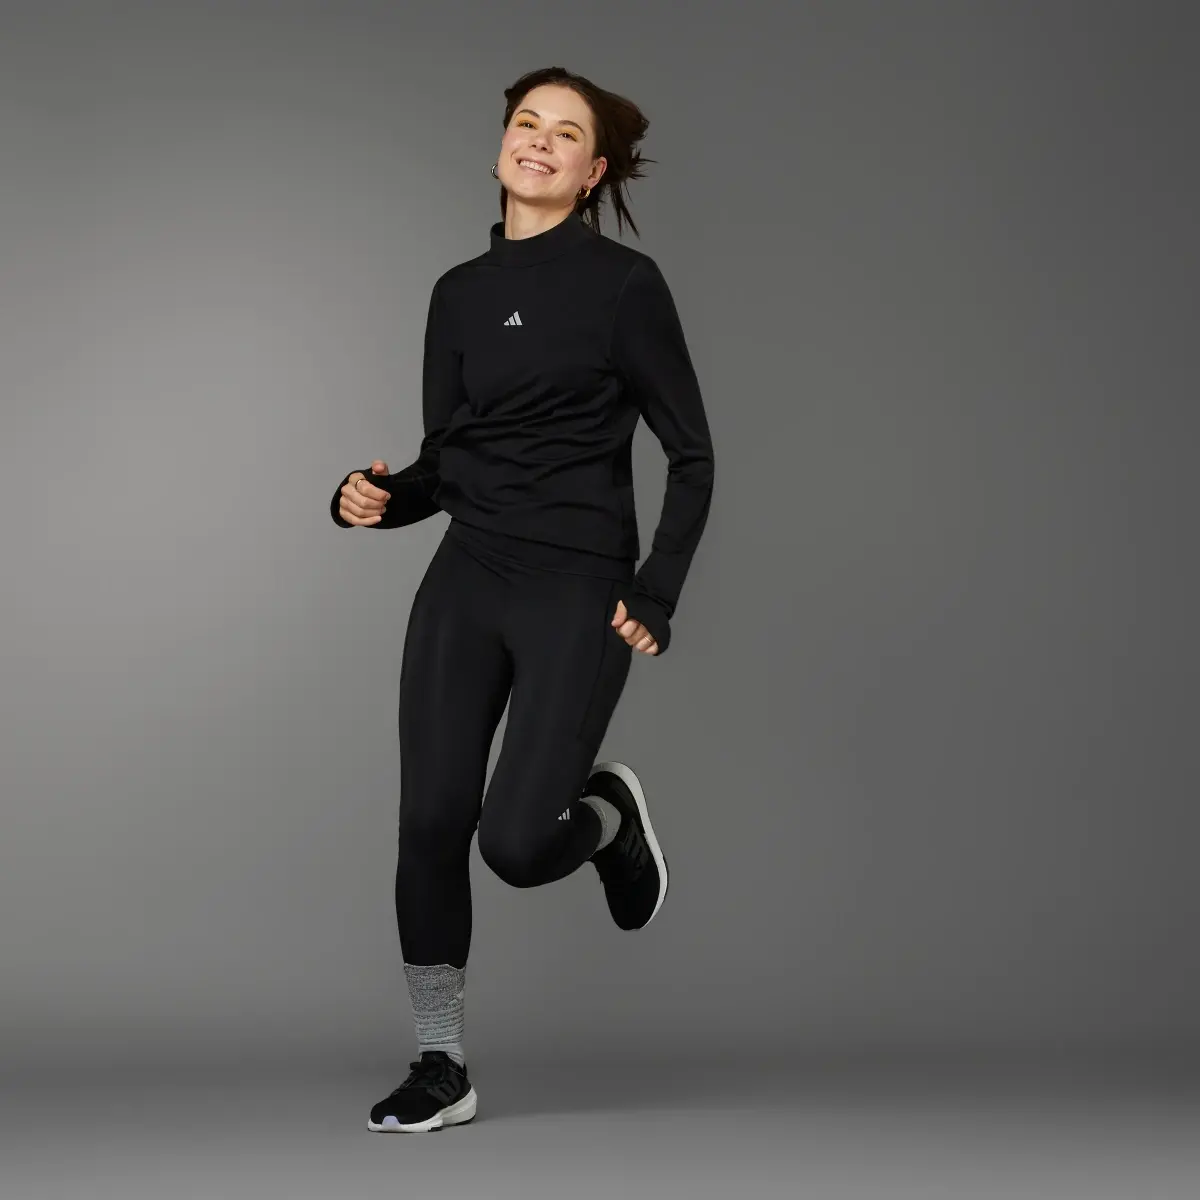 Adidas Koszulka Ultimate Running Conquer the Elements Merino Long Sleeve. 3